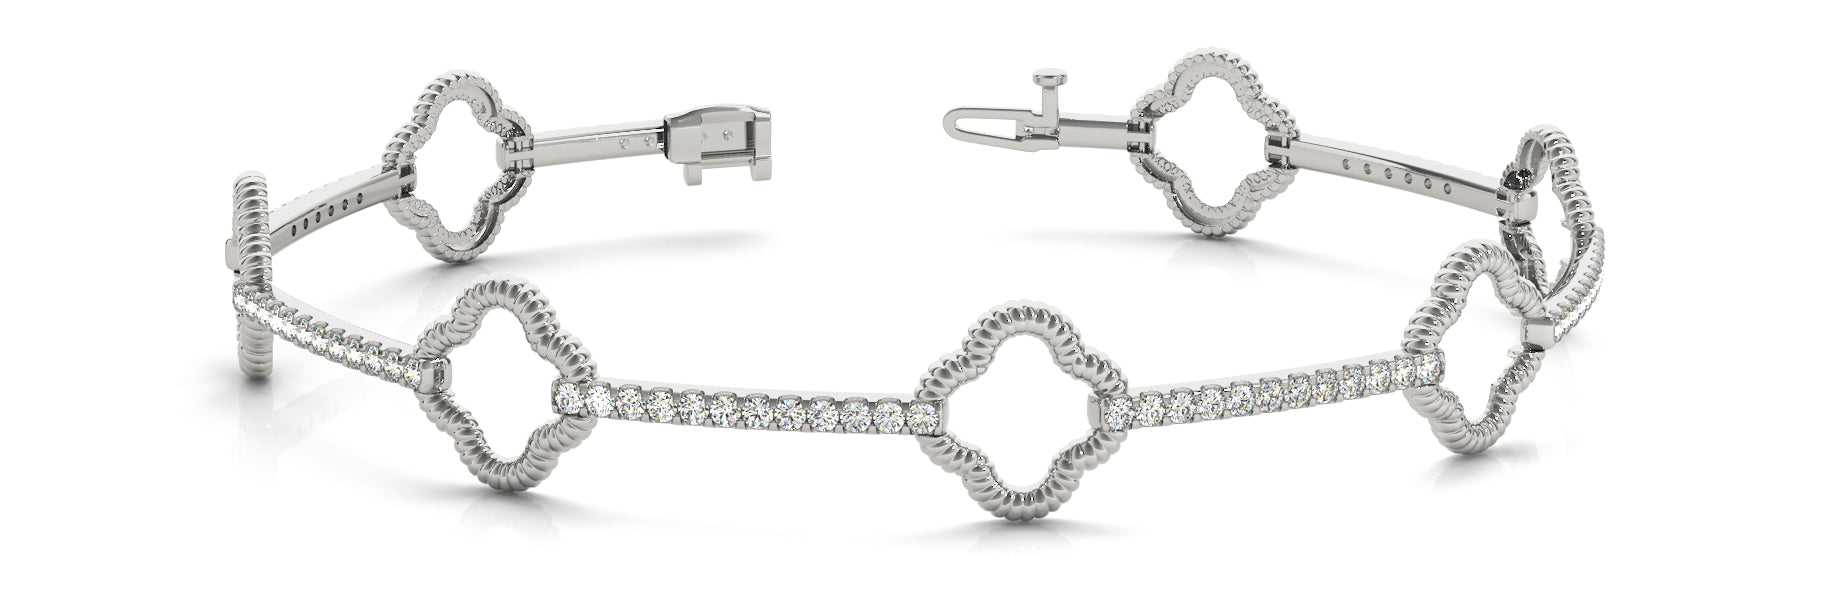 Fancy Diamond Bracelet Ladies 1.09ct tw - 14kt Gold